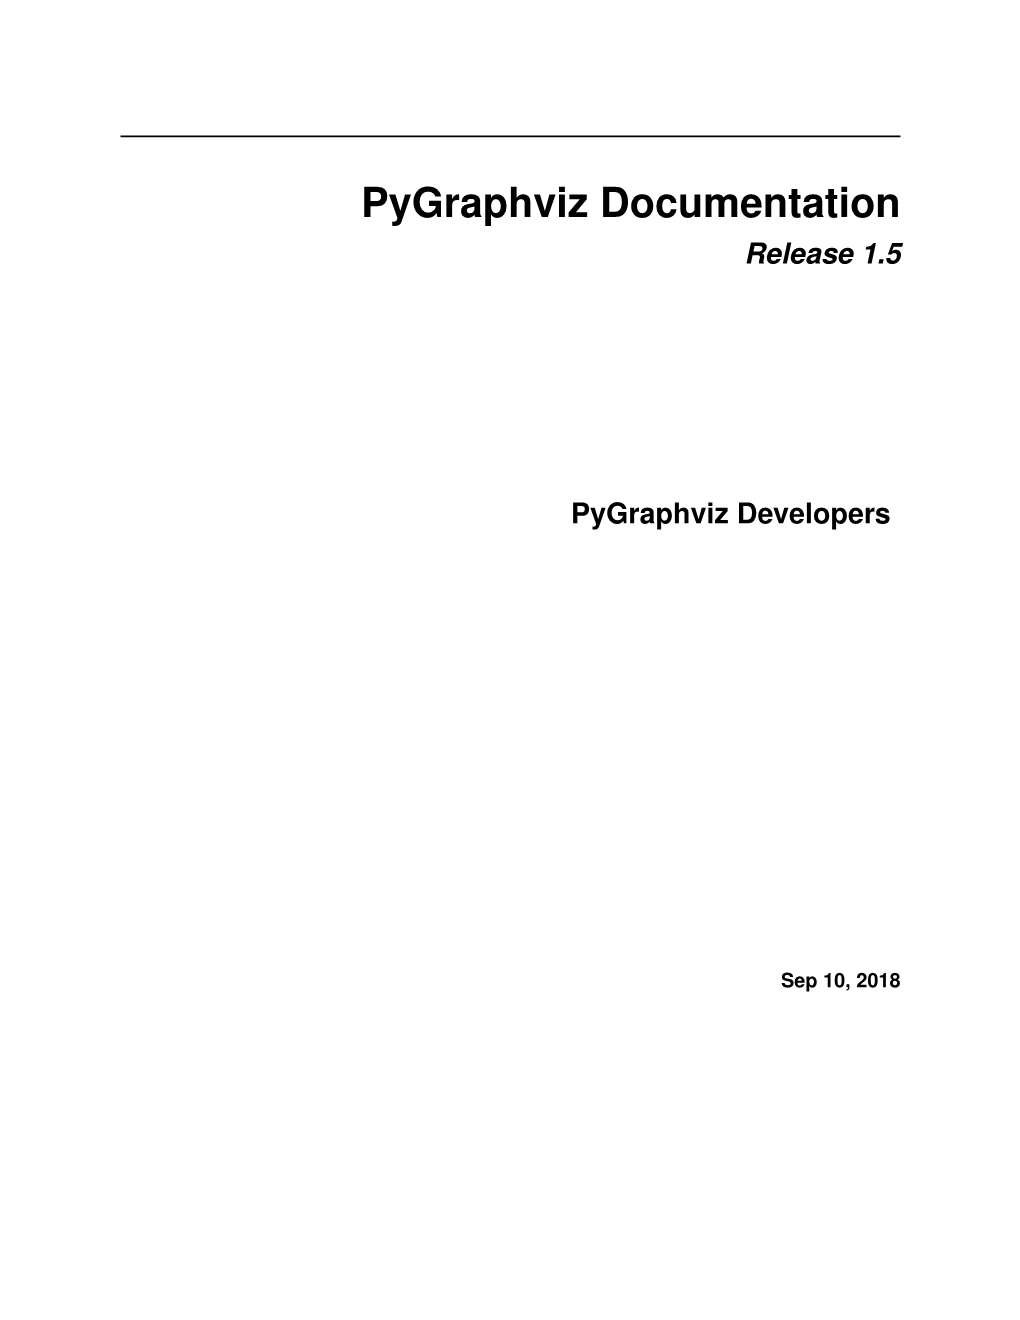 Pygraphviz Documentation Release 1.5